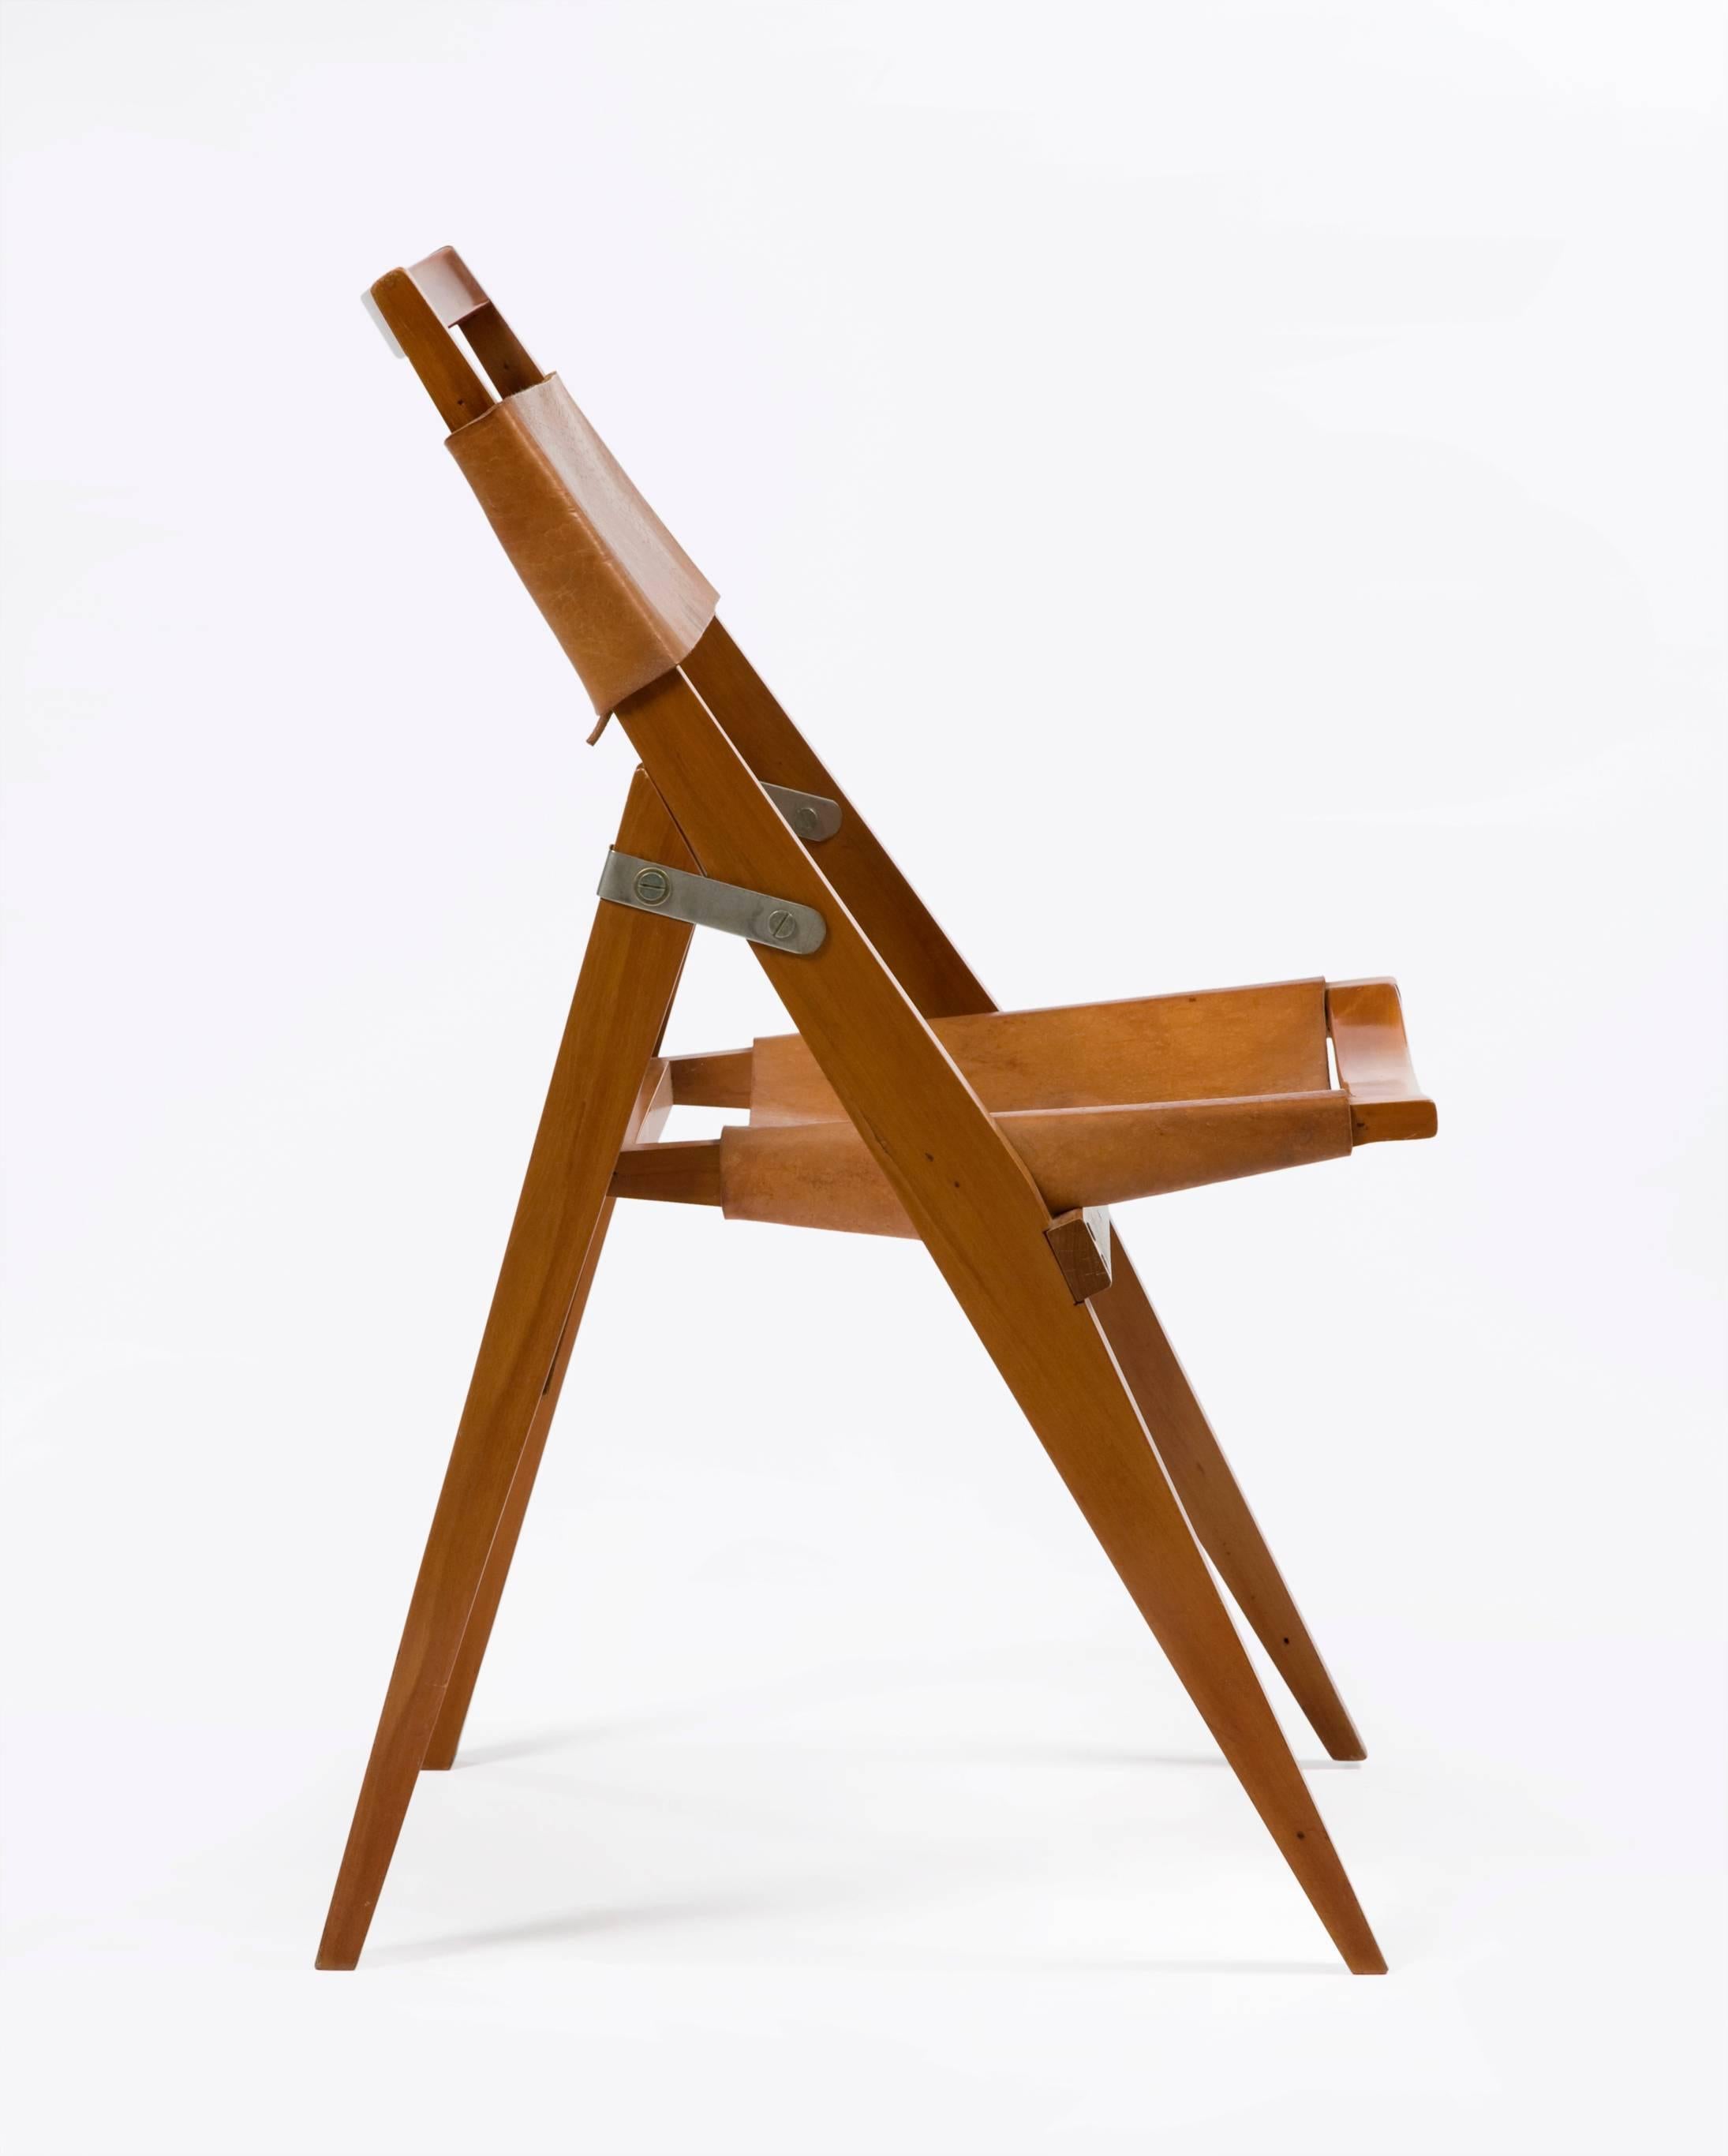 Lina Bo Bardi folding chair manufactured by Estudio Arte De Palma, Sao Paulo, Brazil, 1950s.